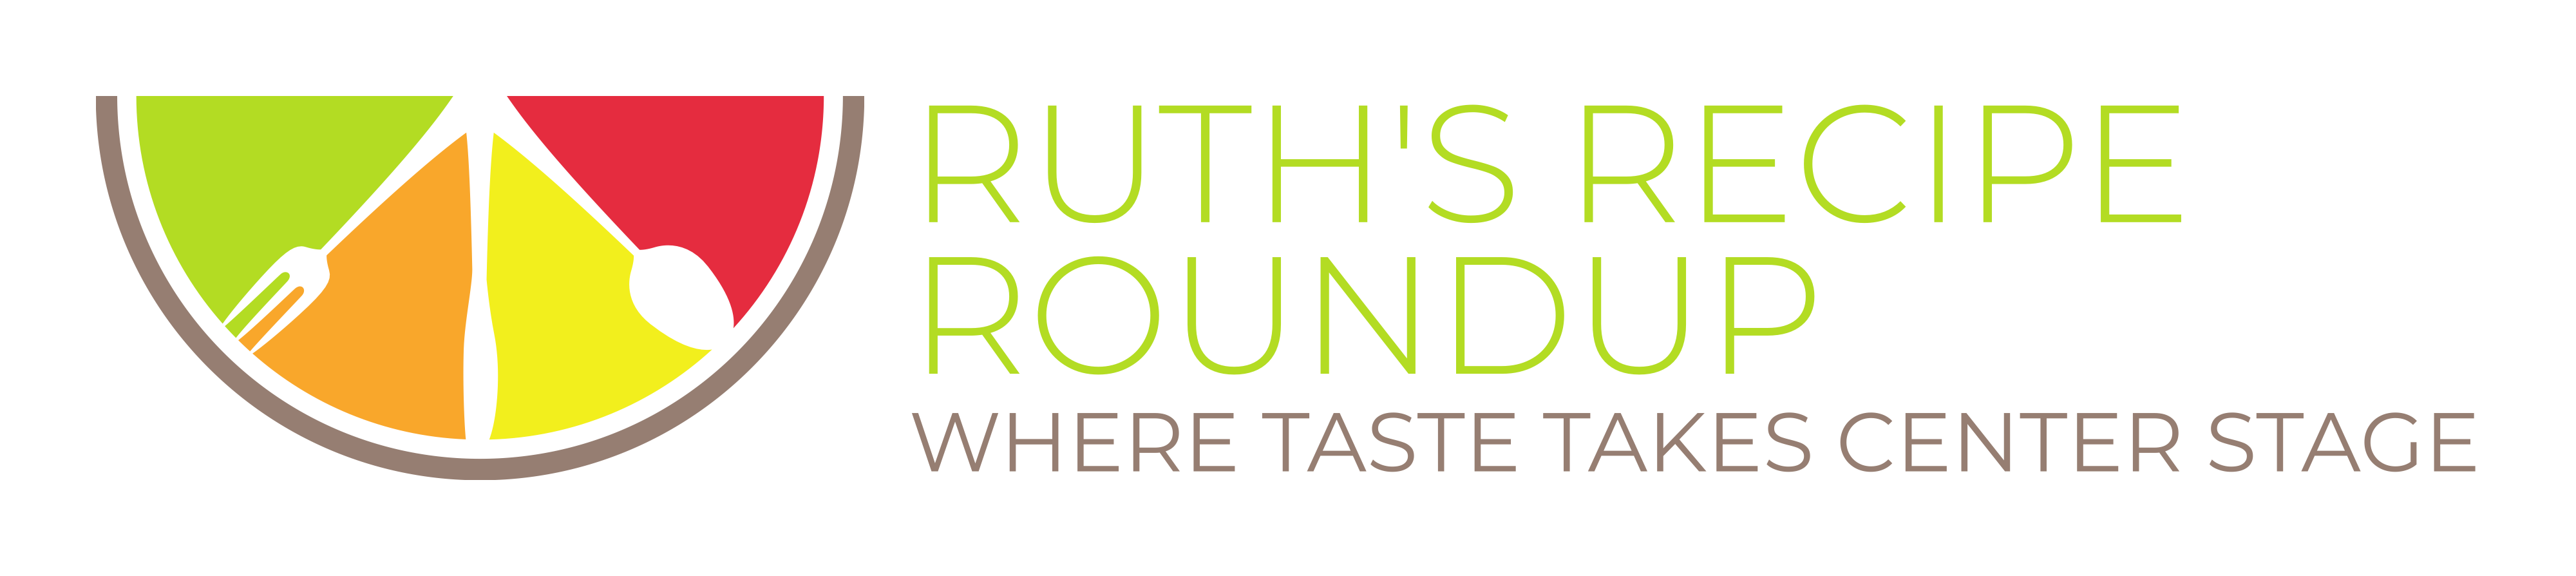 Ruth's Recipe Roundup Logo